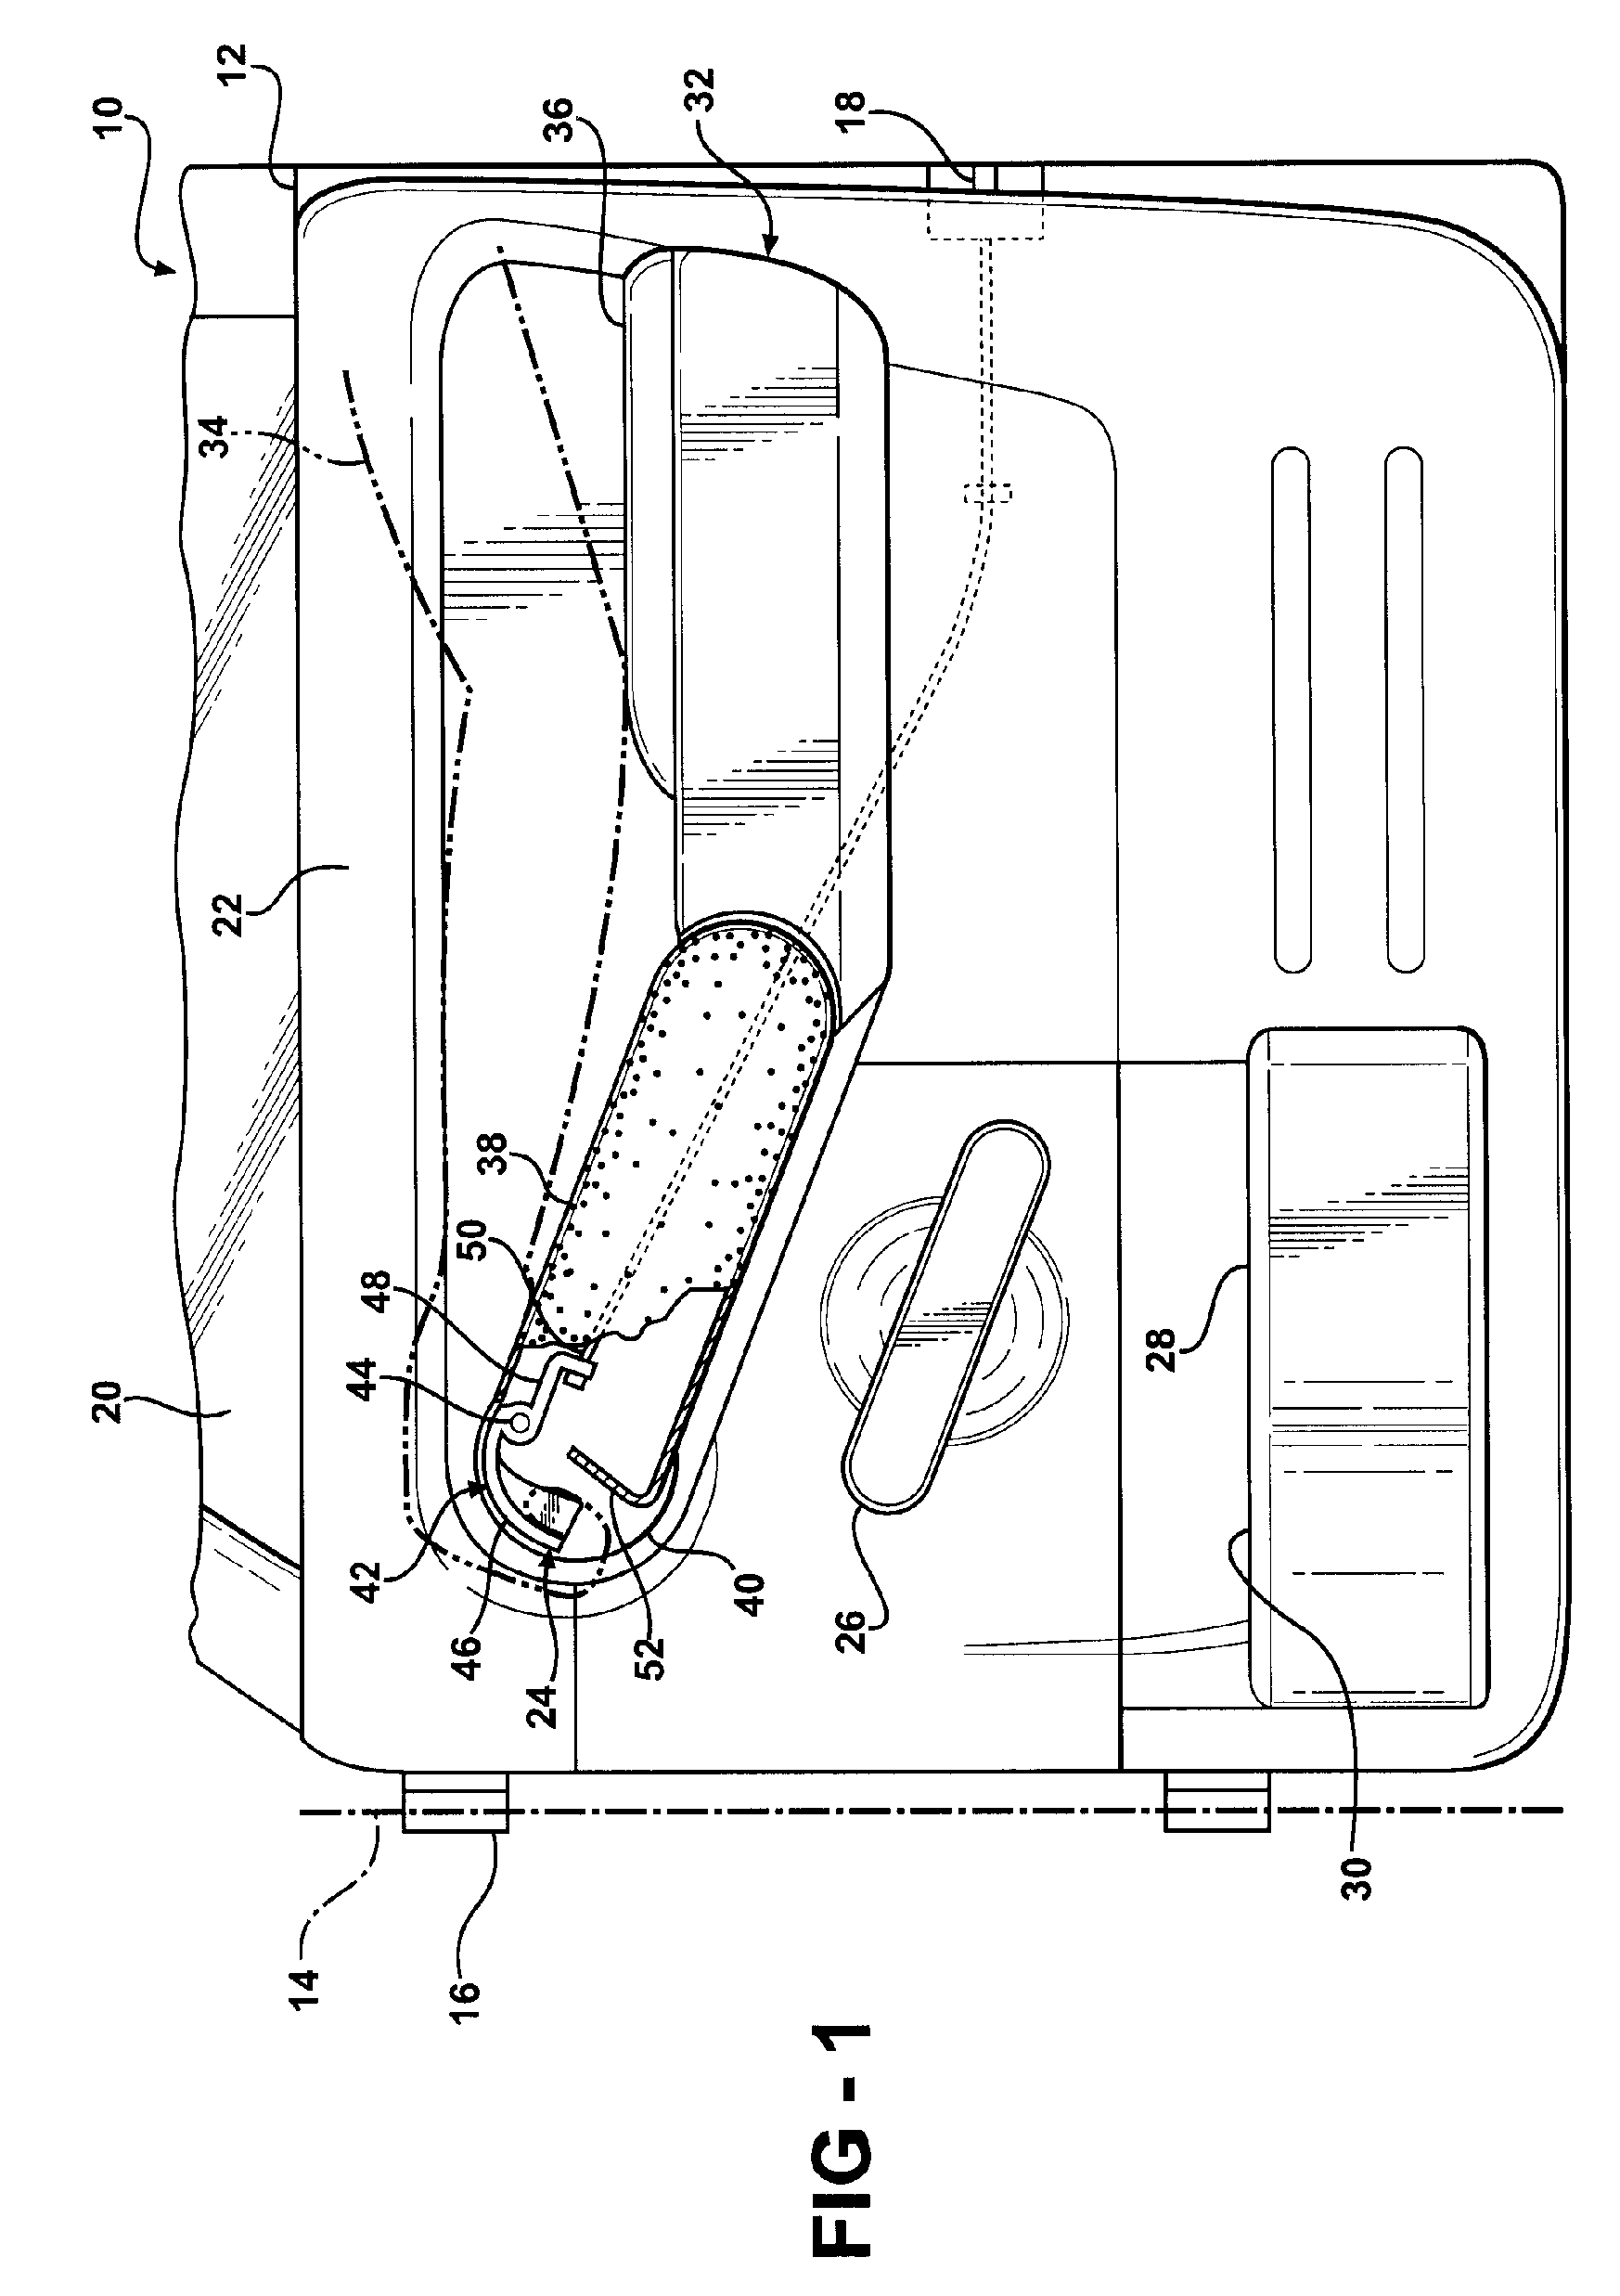 Automotive door assembly